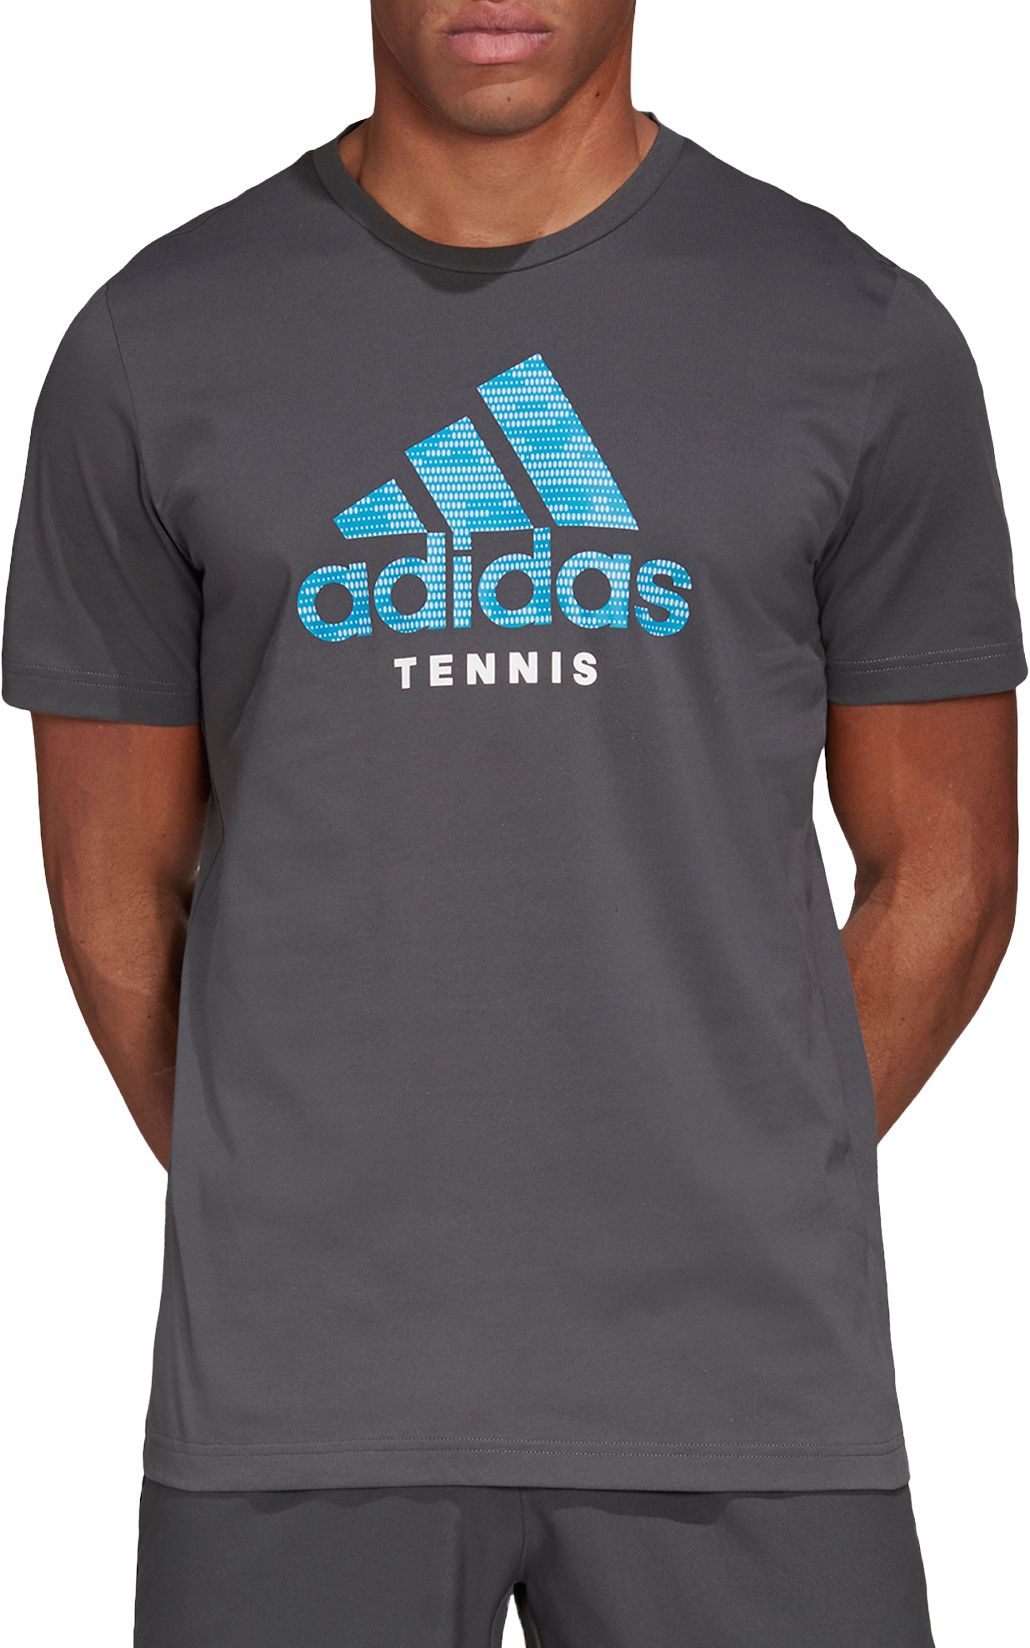 adidas tennis logo t shirt